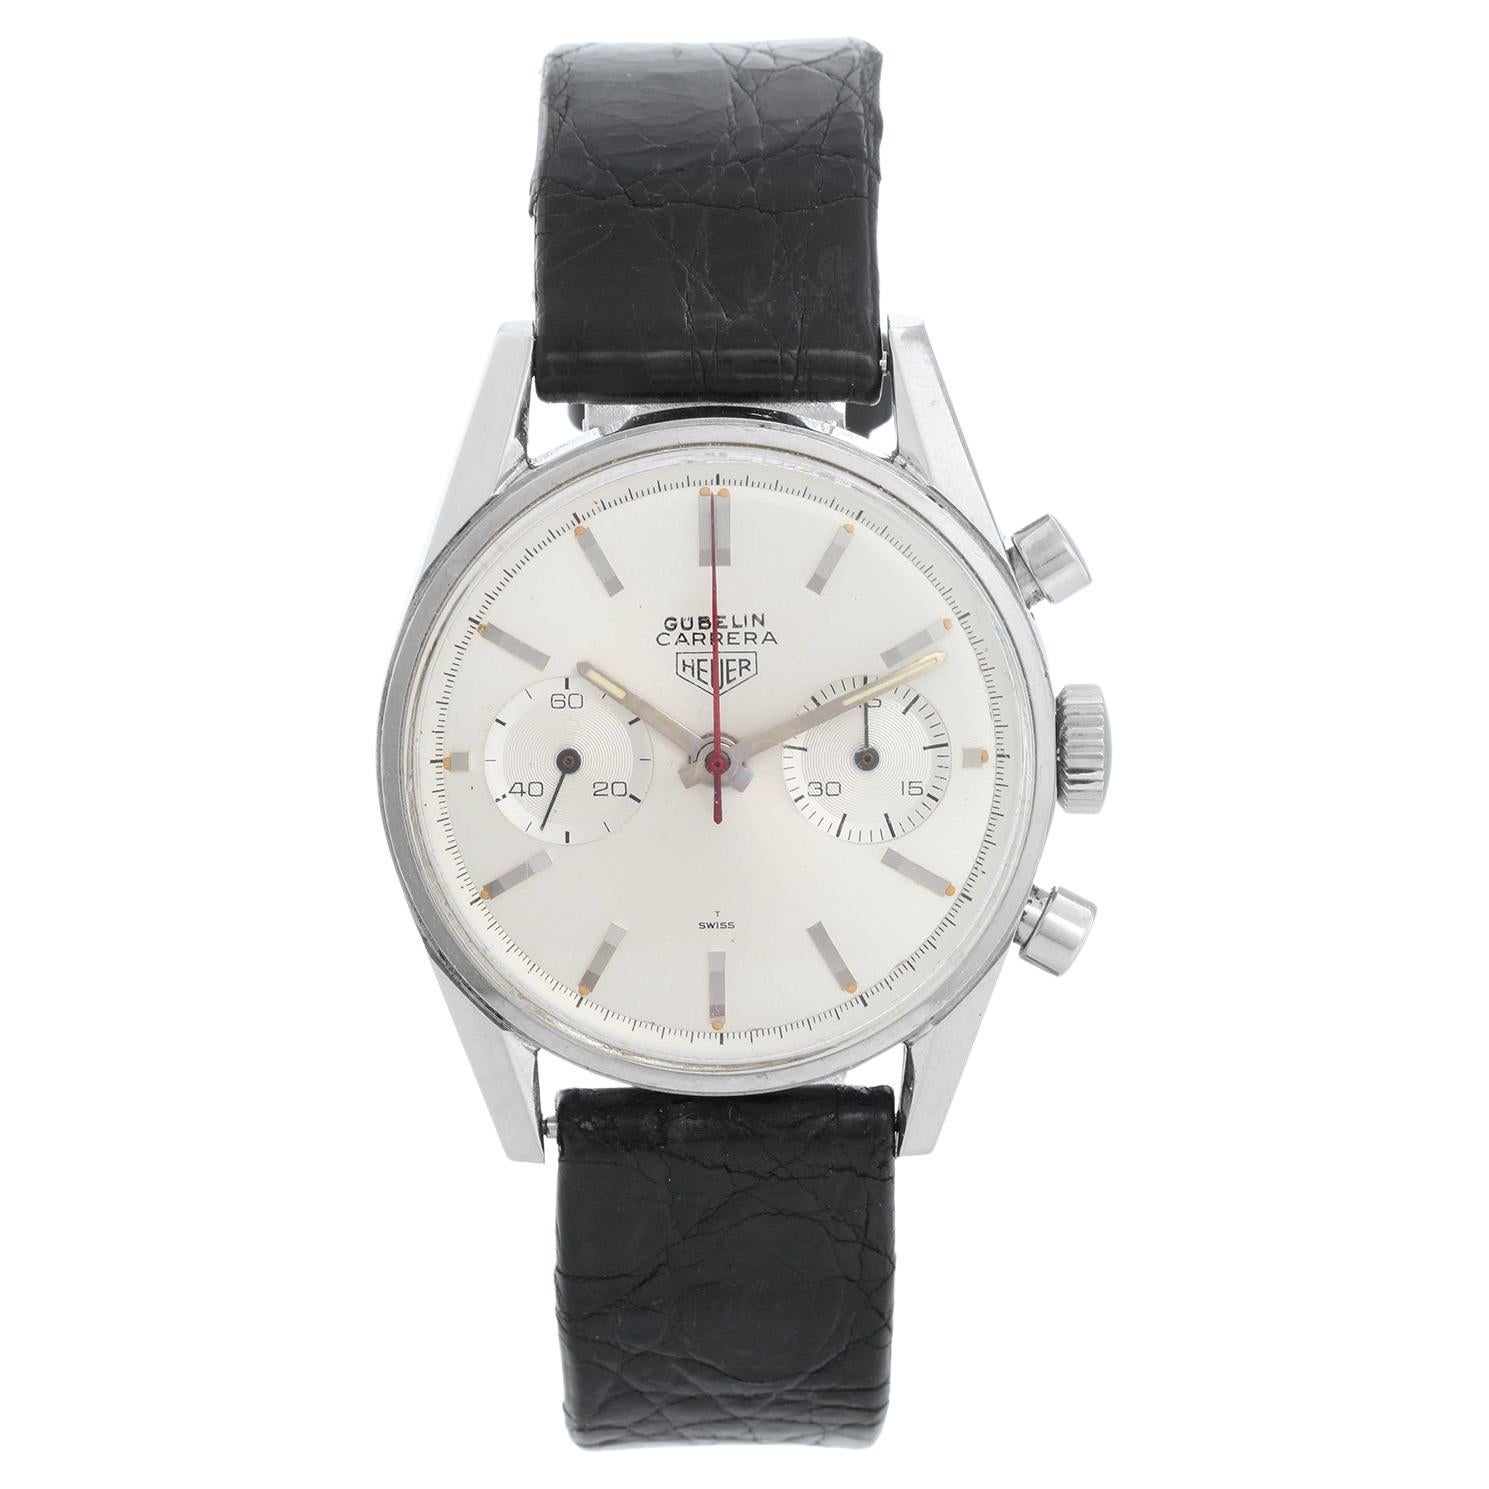 Tag Heuer Carrera "Gübelin" Men's Steel Chronograph Watch Ref 3647S